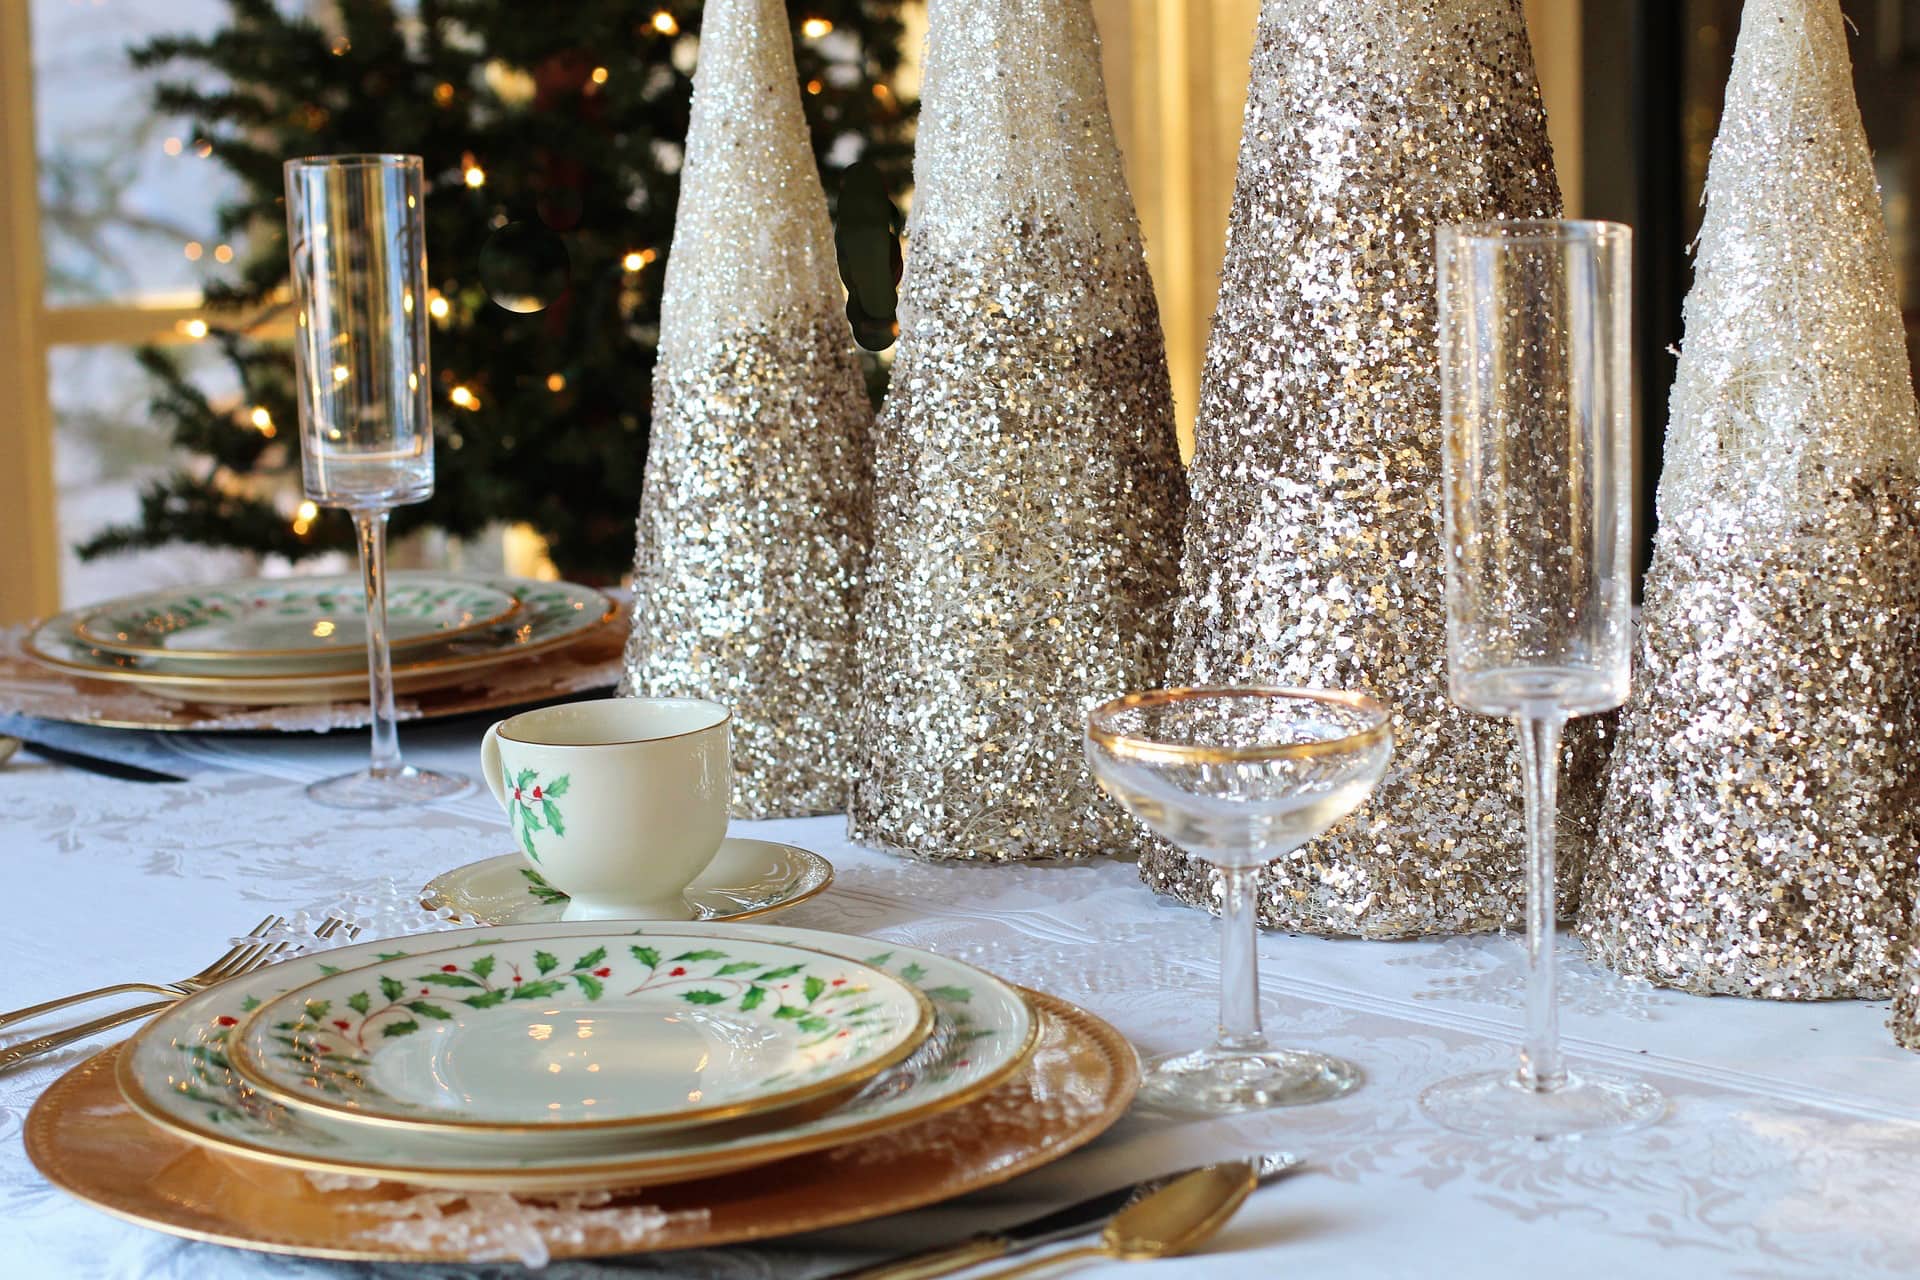 a festive table set for christmas dinner.